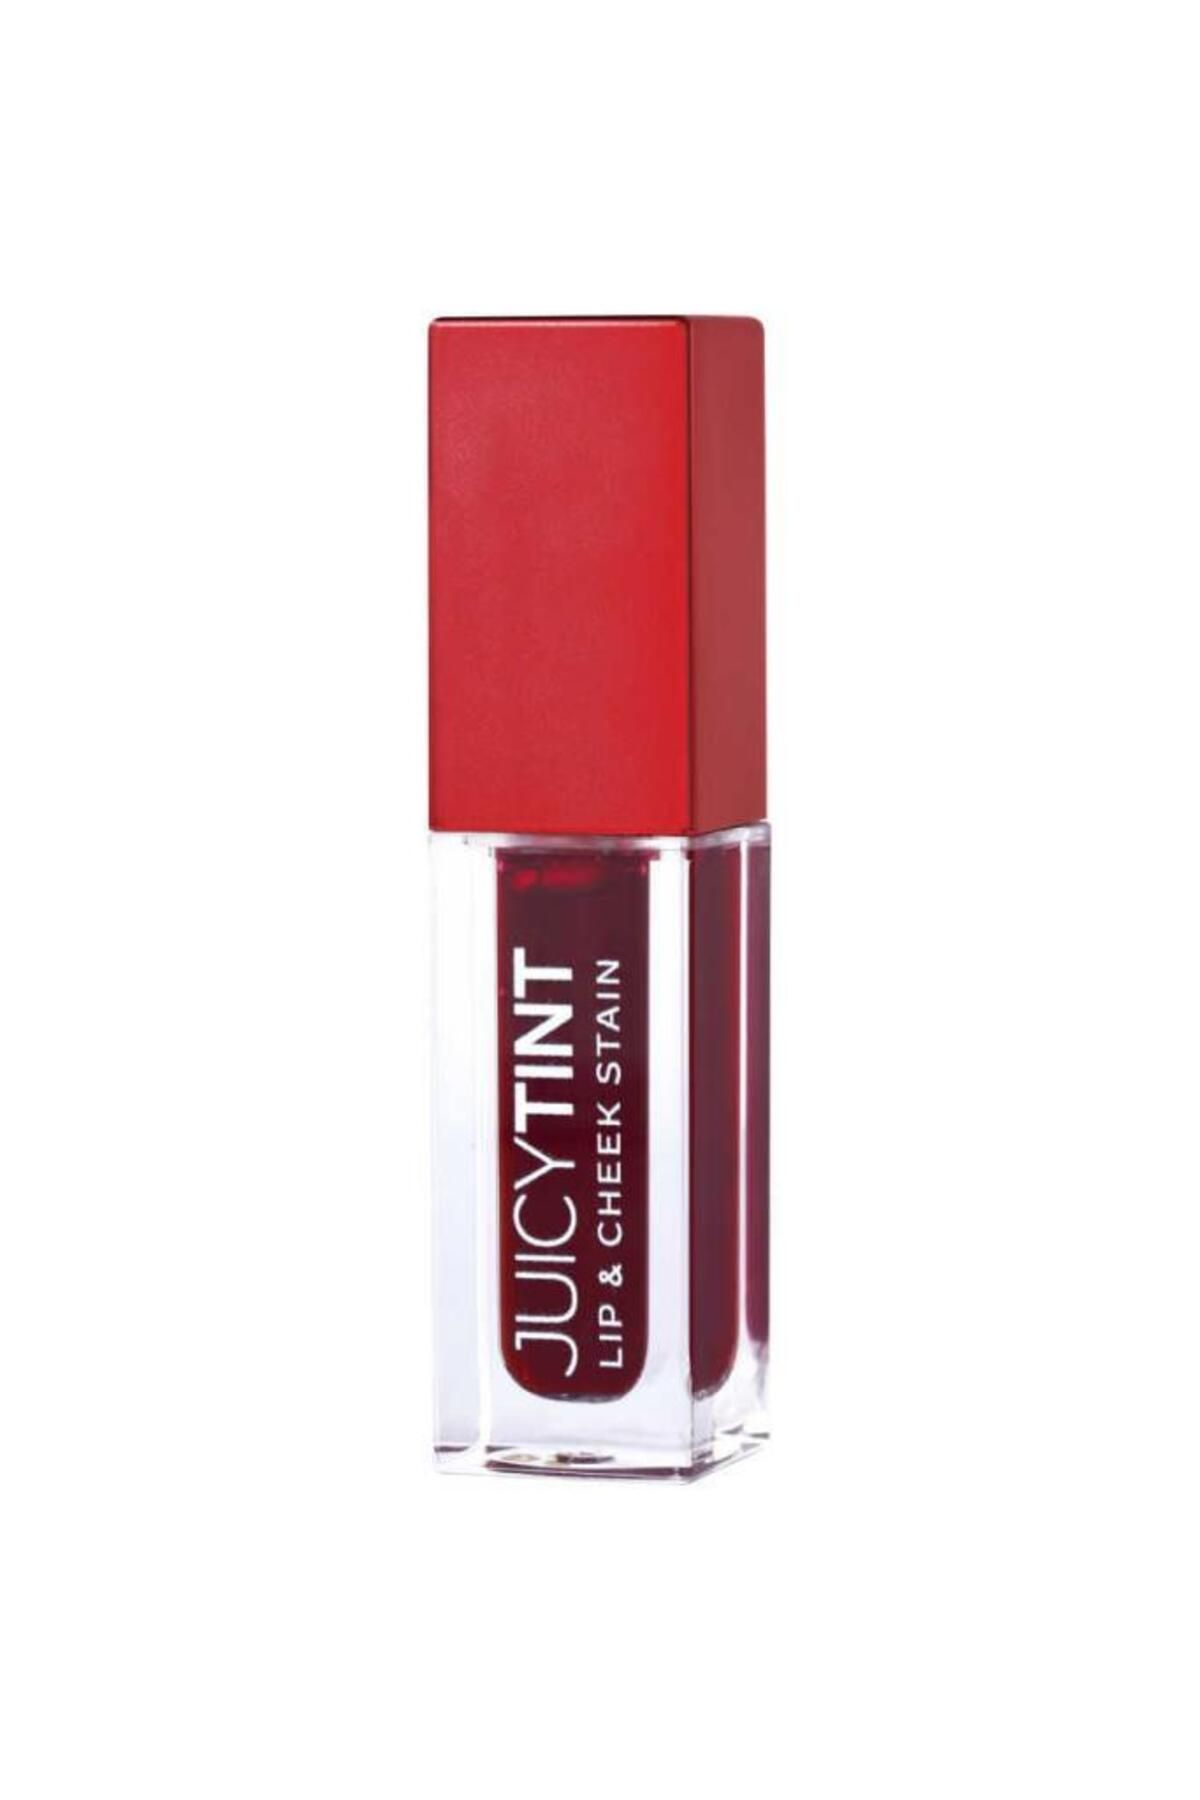 Golden Rose Juicy Tint Lip & Cheek Stain No: 03 Ruby Rose - Ruj & Allık